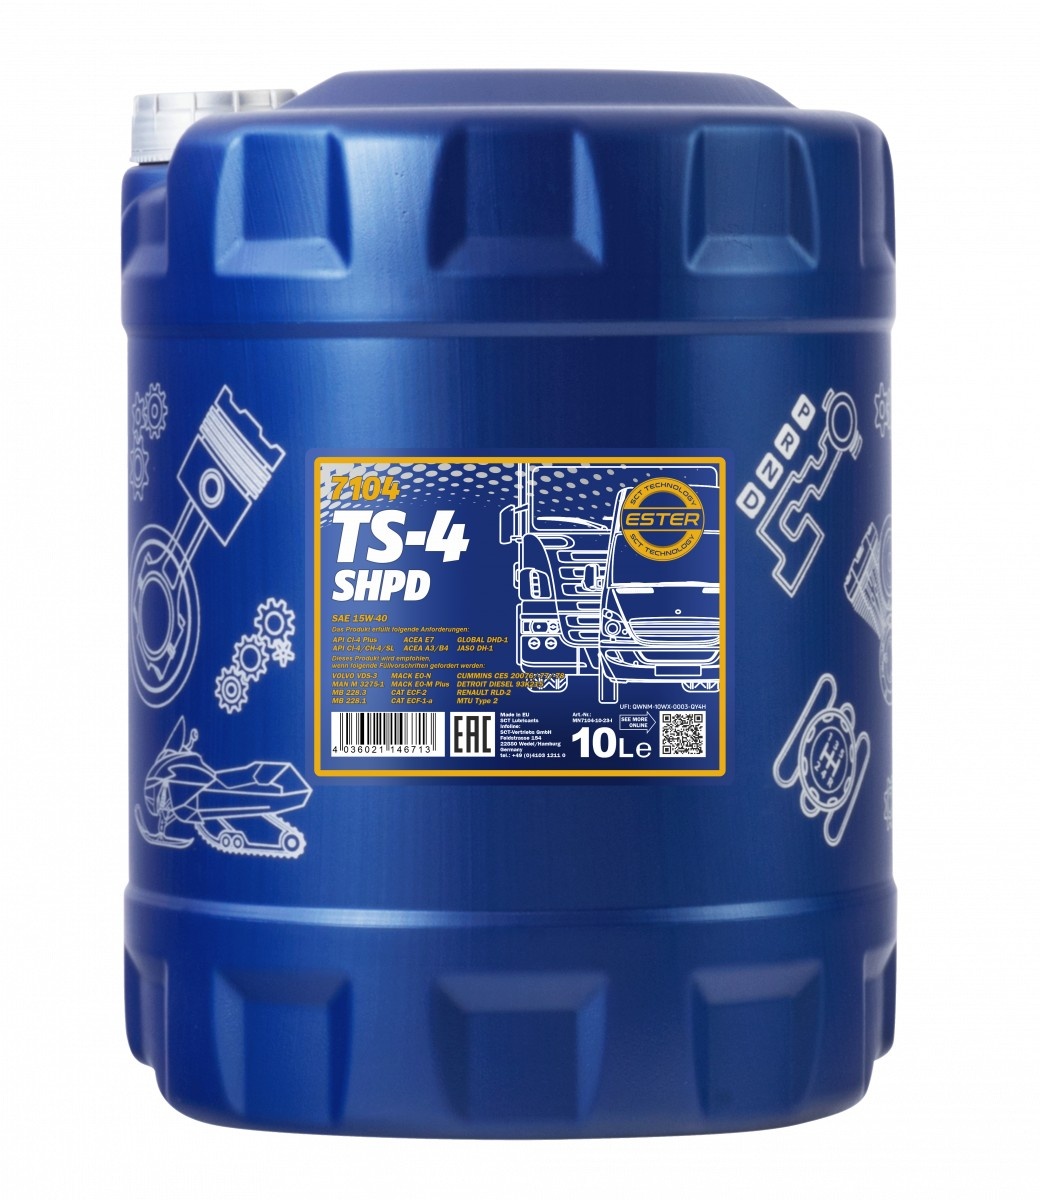 Моторное масло Mannol TS-4 Extra SHPD 15W-40 7104 10L